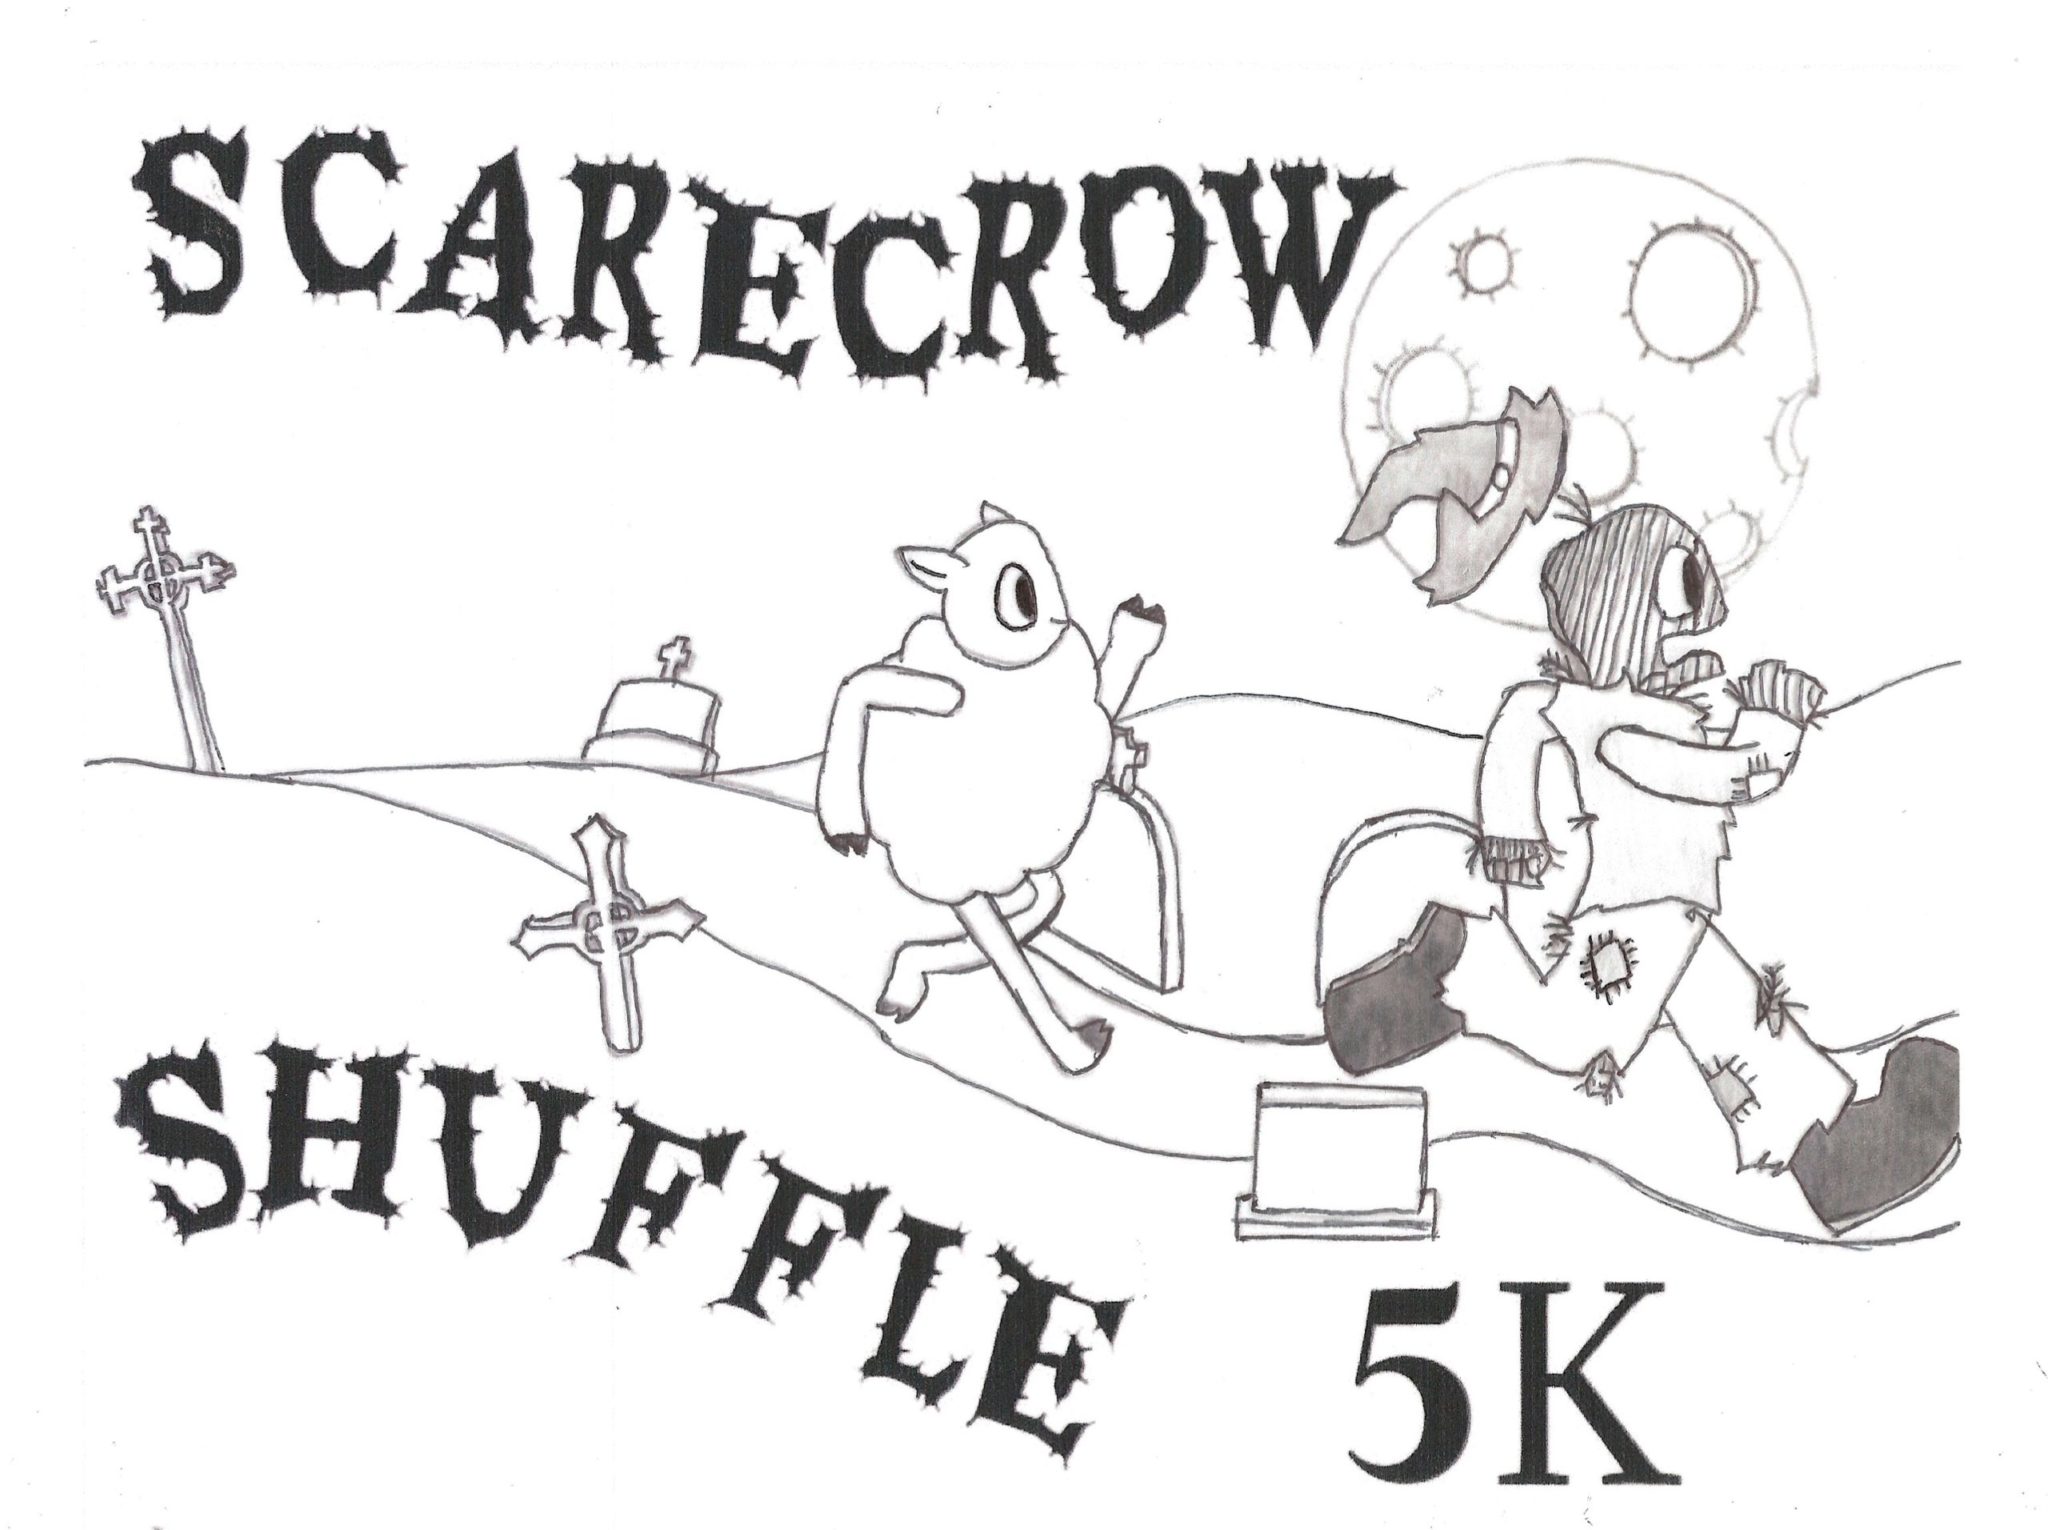 Scarecrow Shuffle 5K (KY) logo on RaceRaves